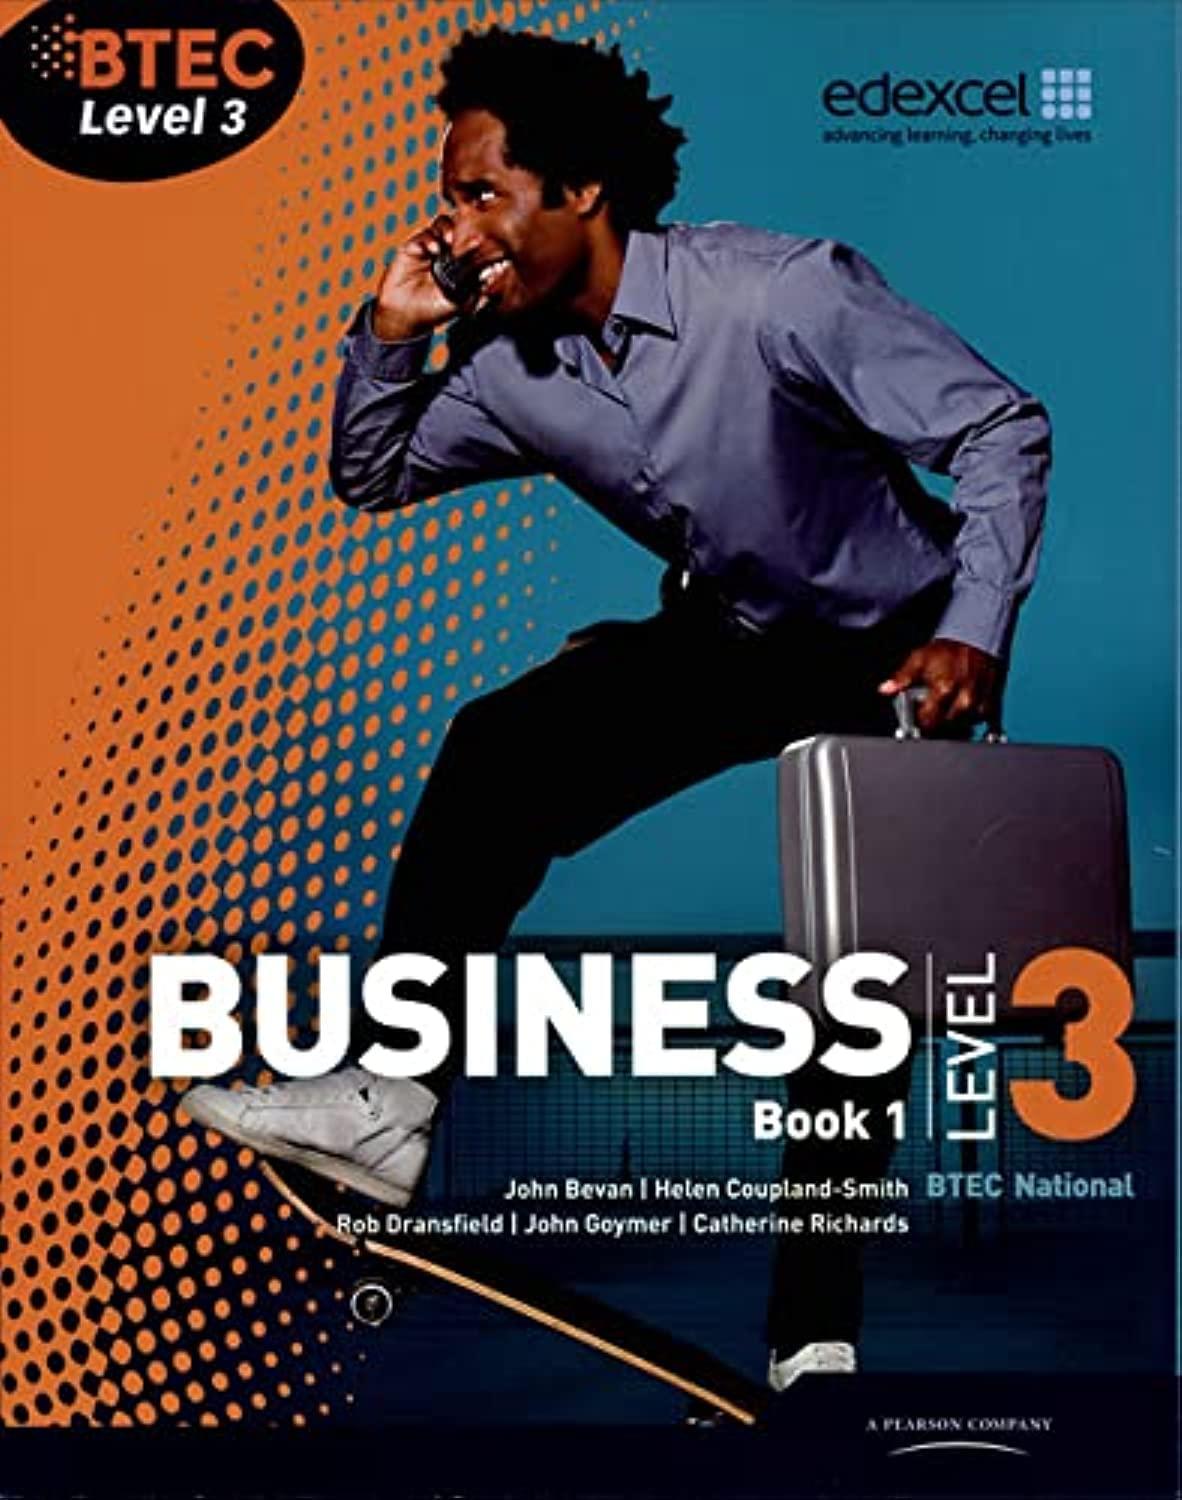 btec level 3 business book 1 3rd edition catherine richards, rob dransfield, john goymer, john bevan